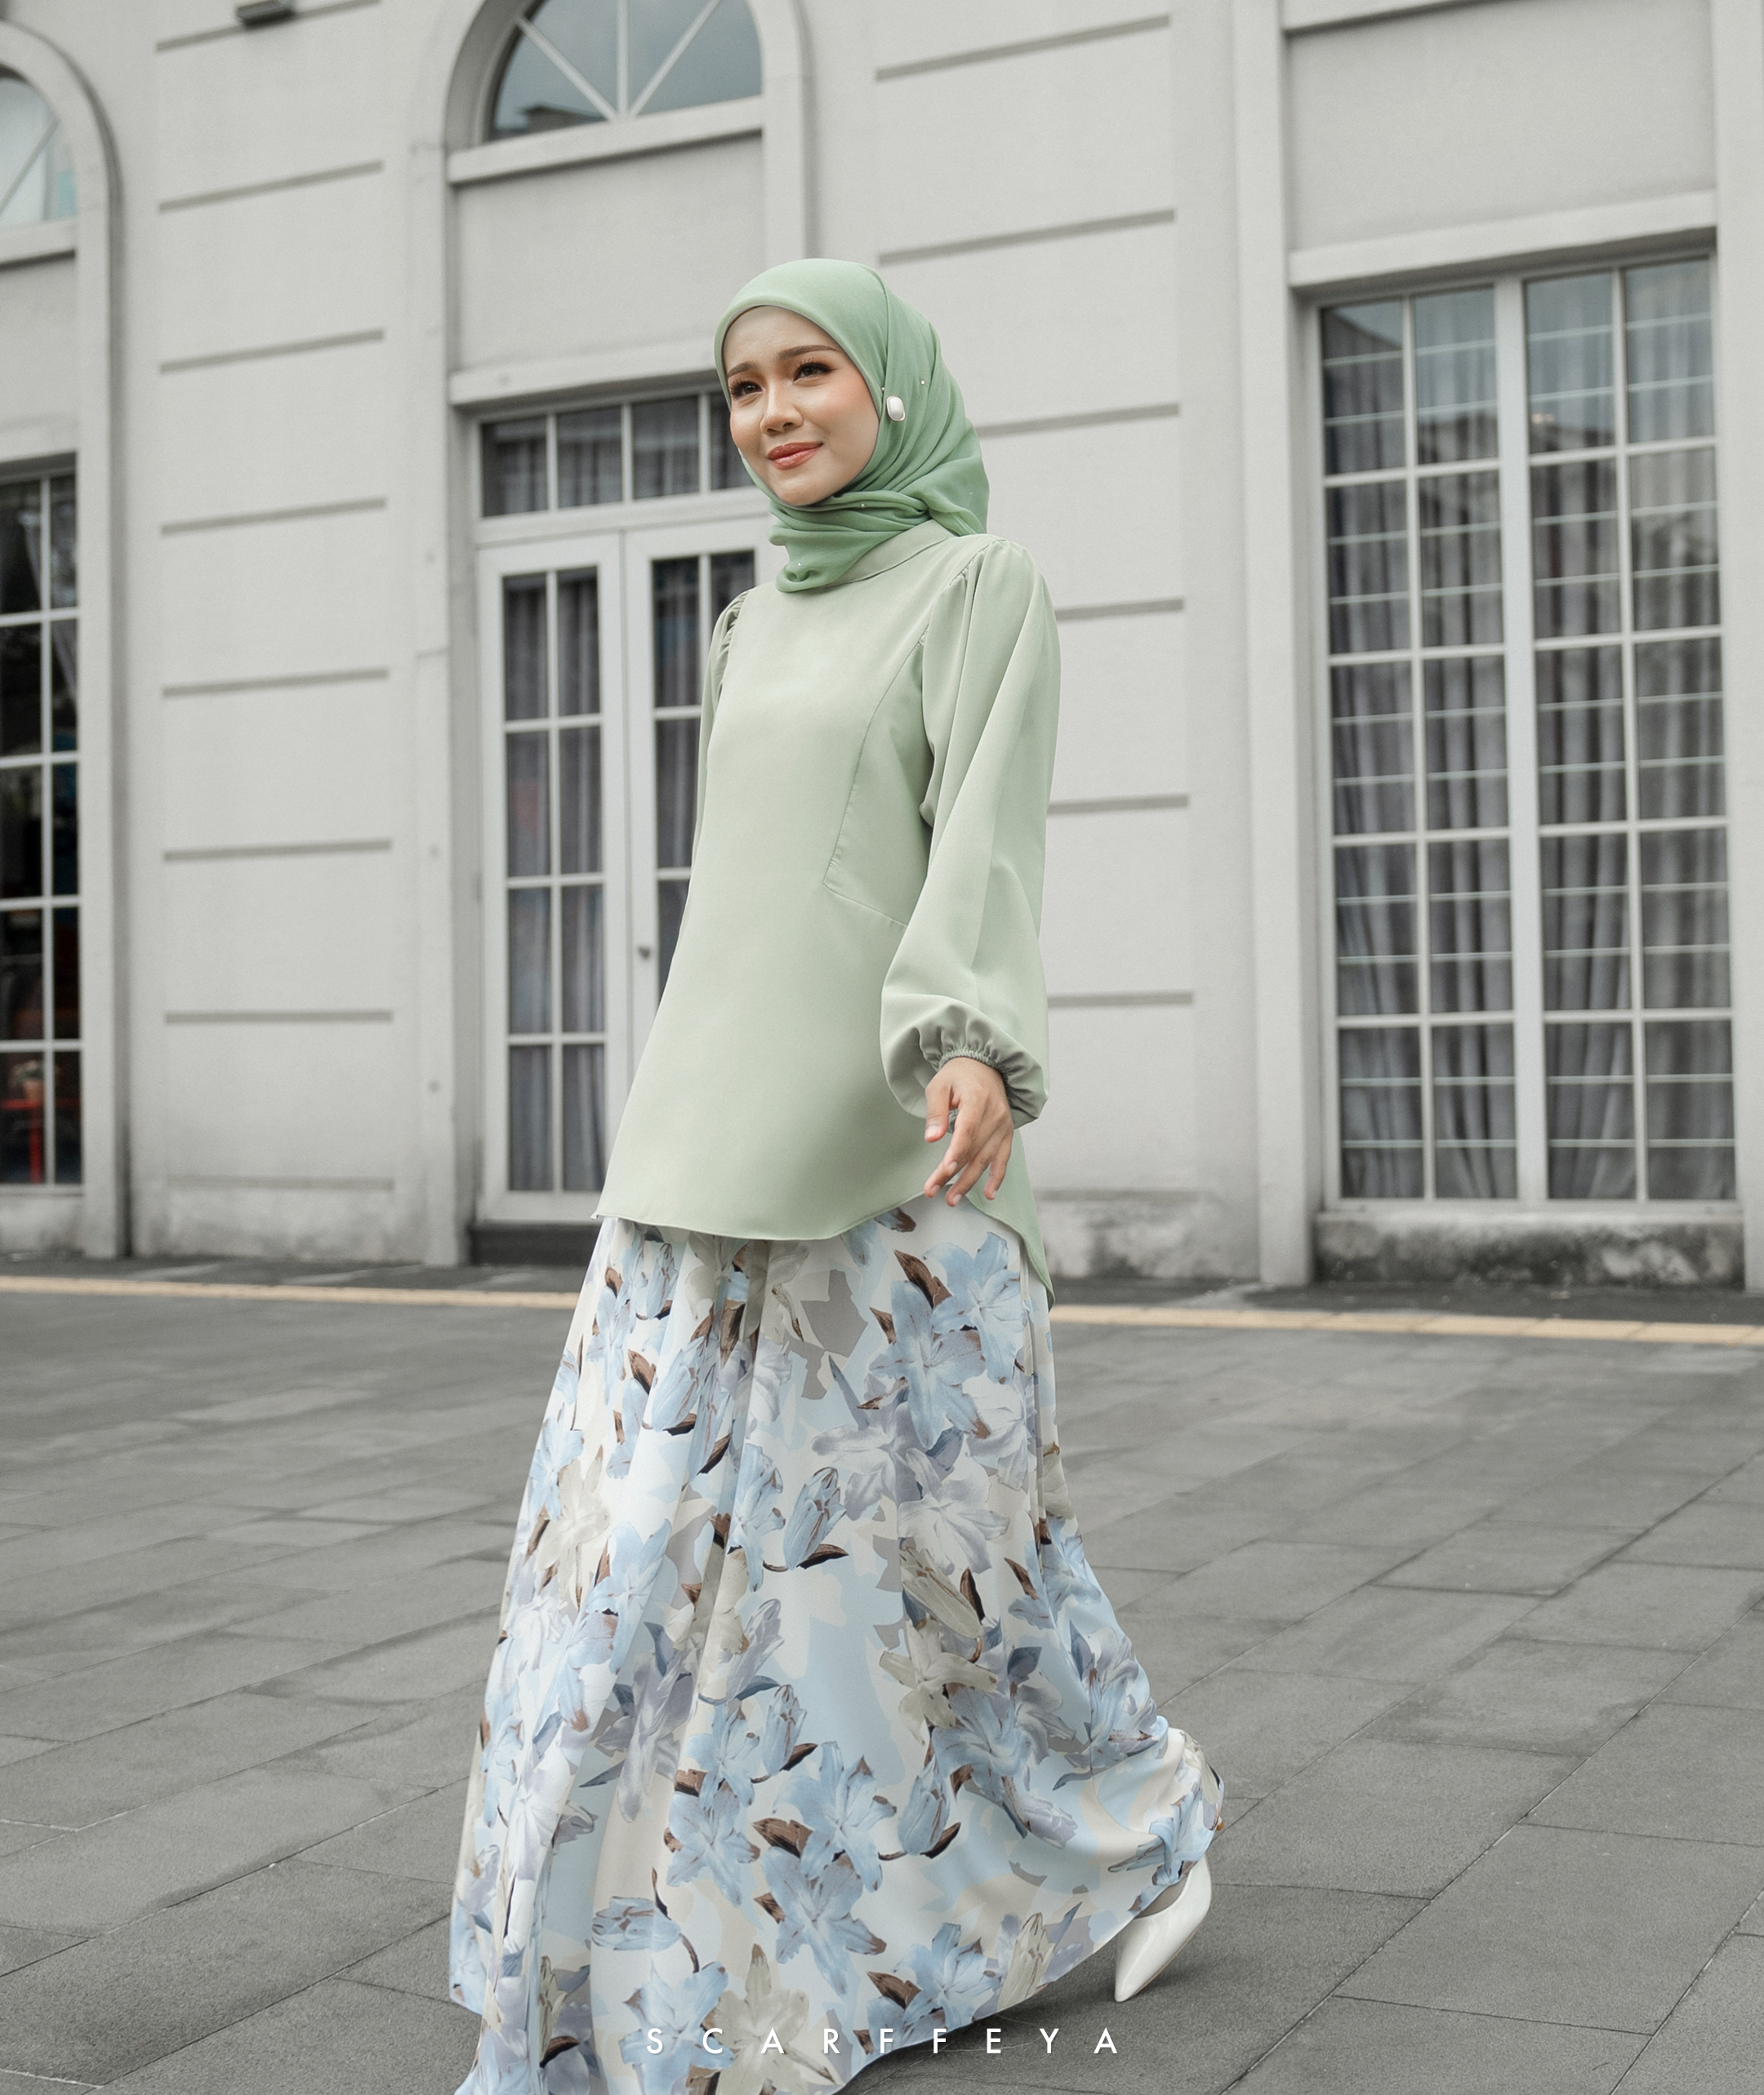 Scarffeya | Malaysia’s Best Clothing Brand